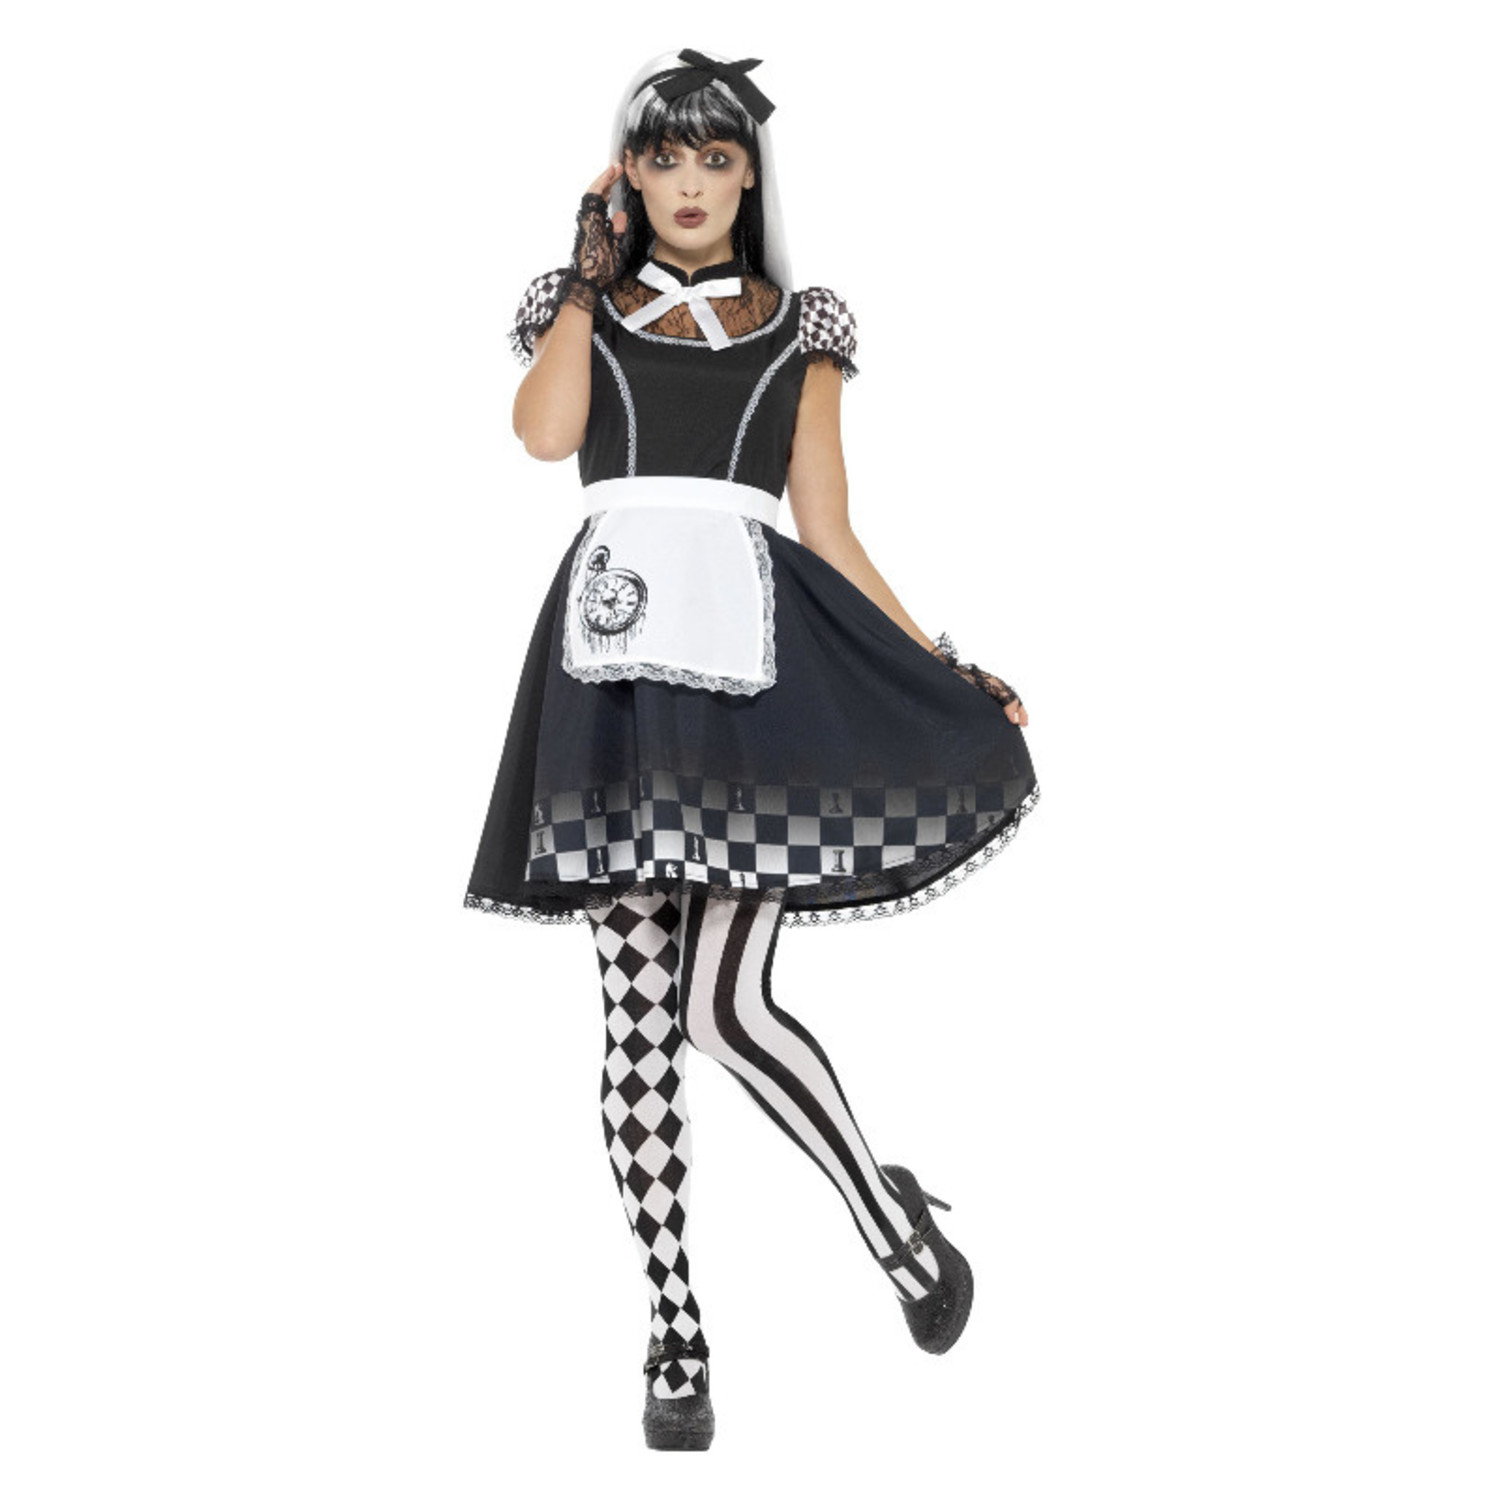 Korting gras onderwerp Ruig Gothic Alice kostuum in zwart wit - e-Carnavalskleding